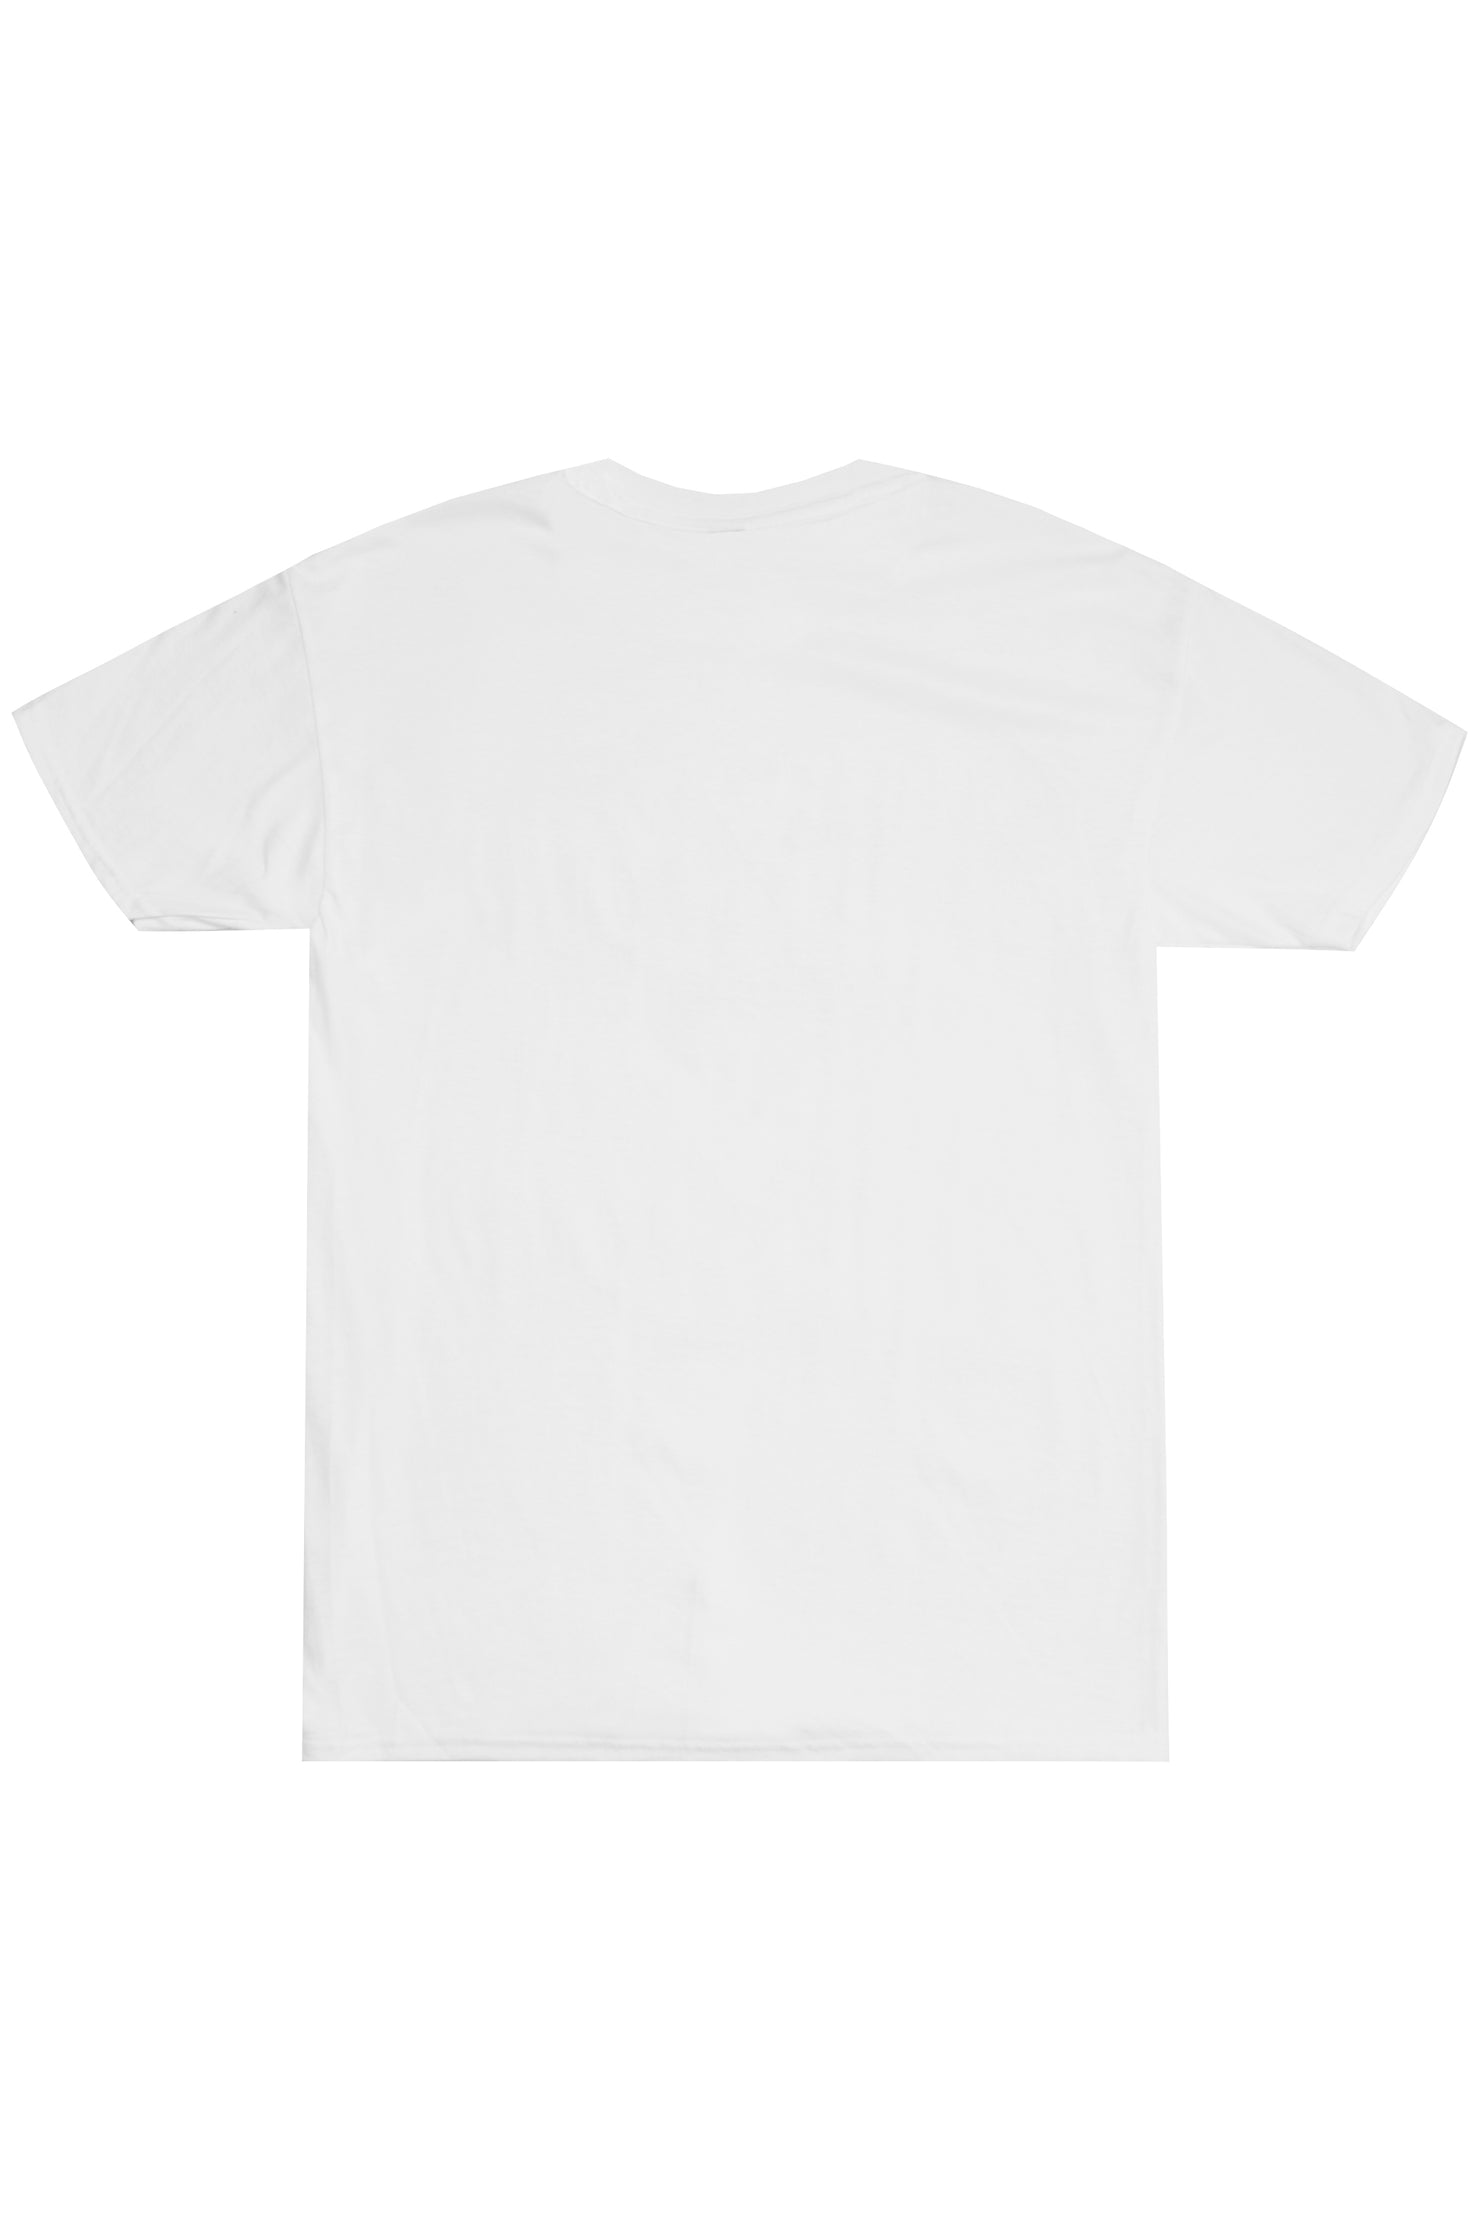 Octavio Printed T-Shirt-White/Black